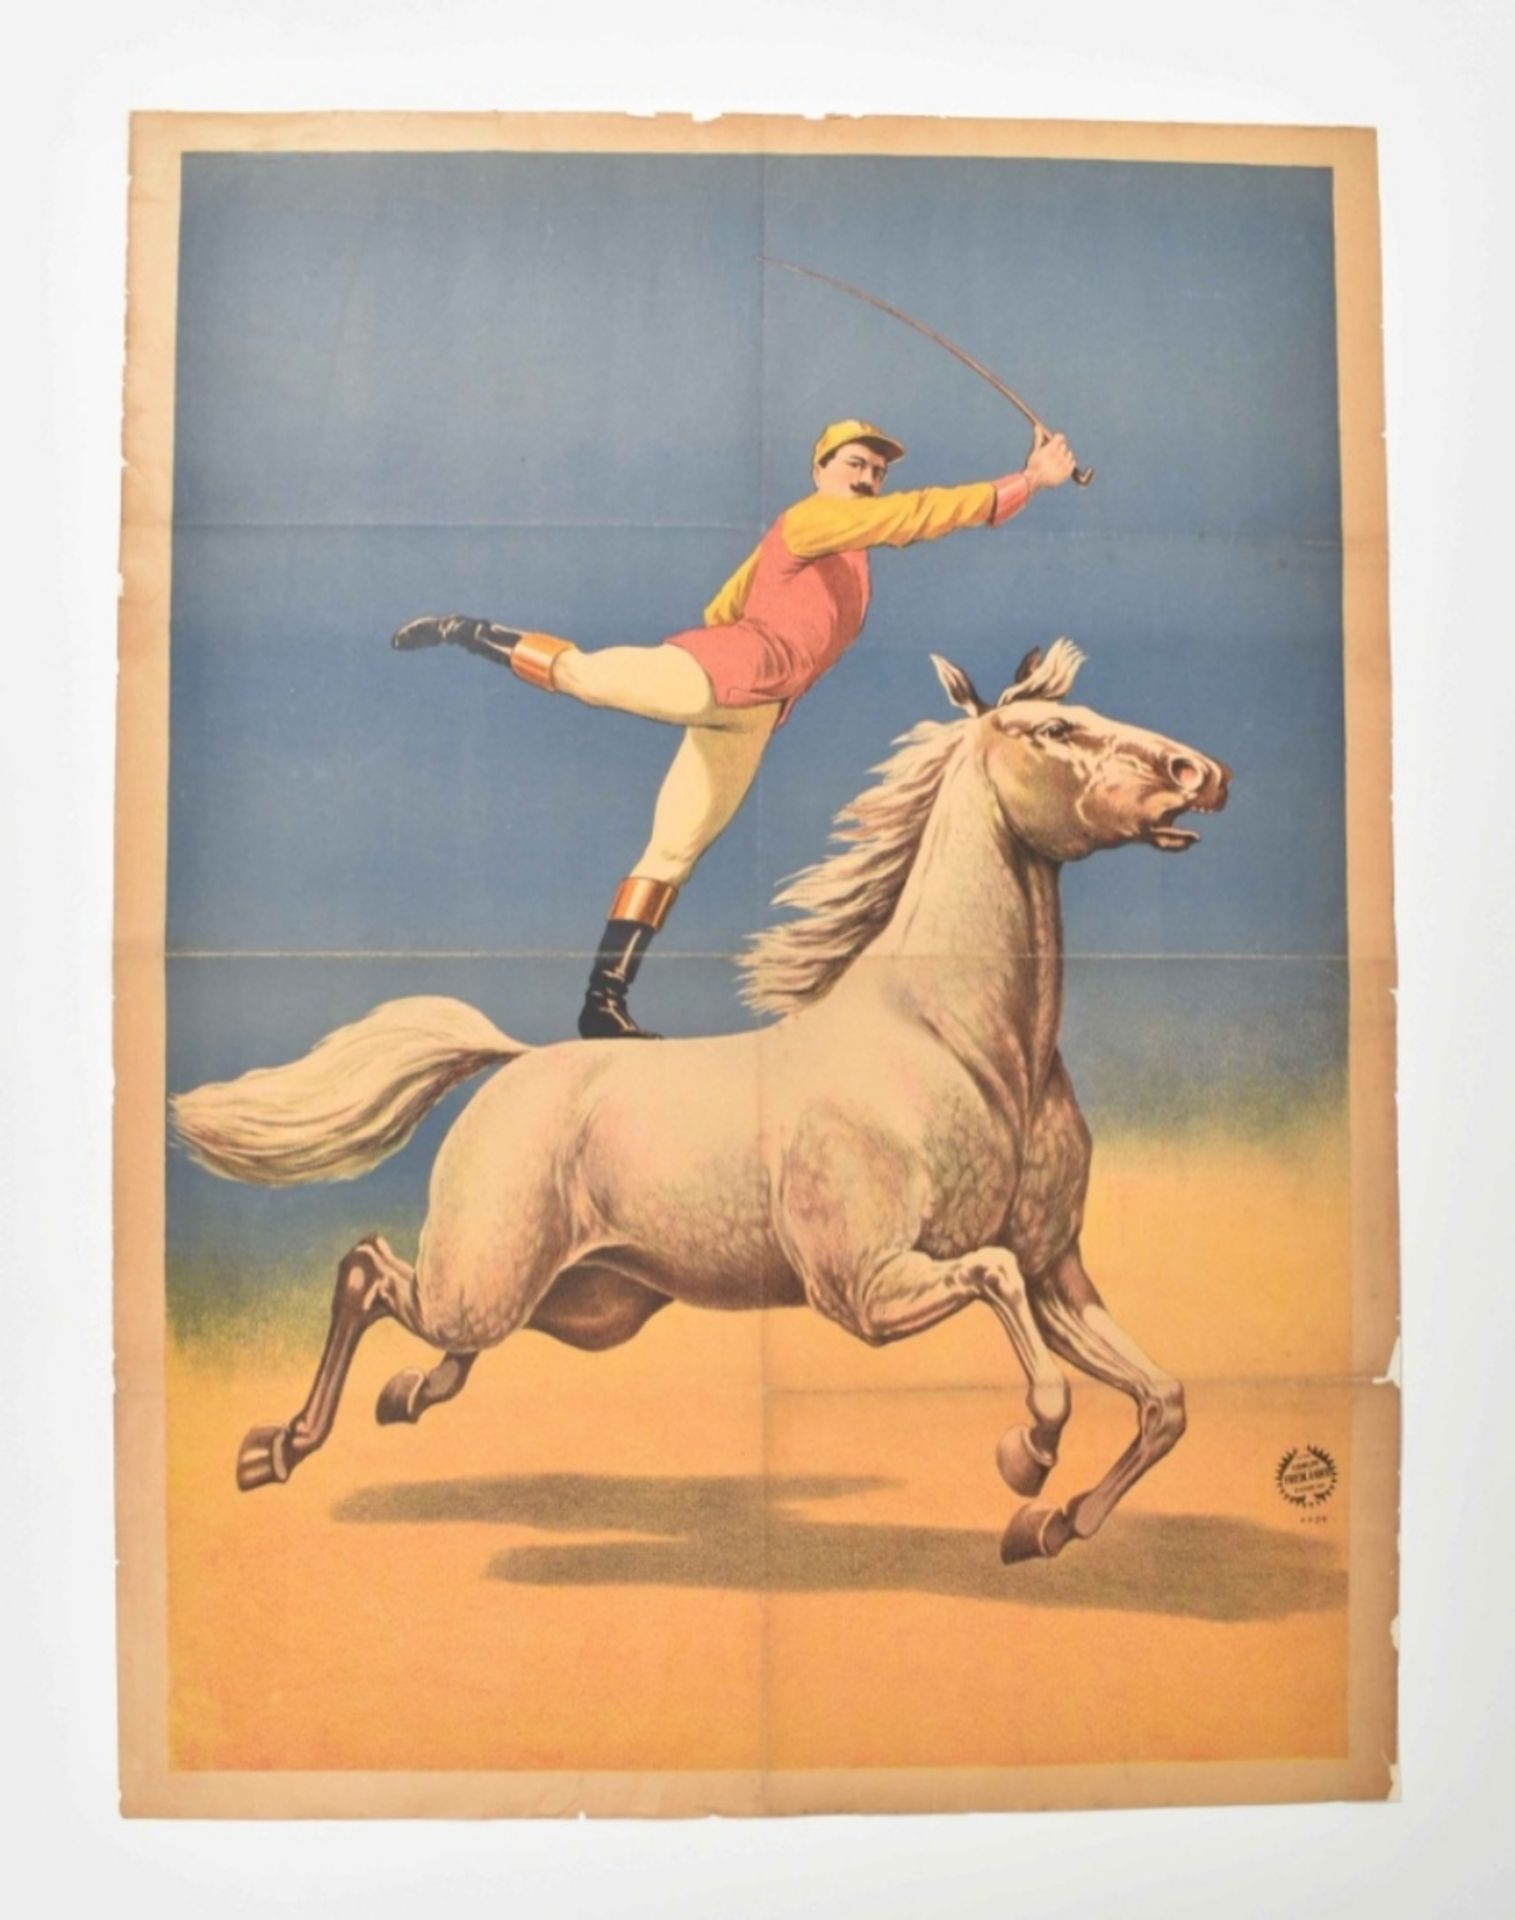 [Acrobatics] [Balance act. Horse] "Acrobat on horseback"  Friedländer, Hamburg, 1908